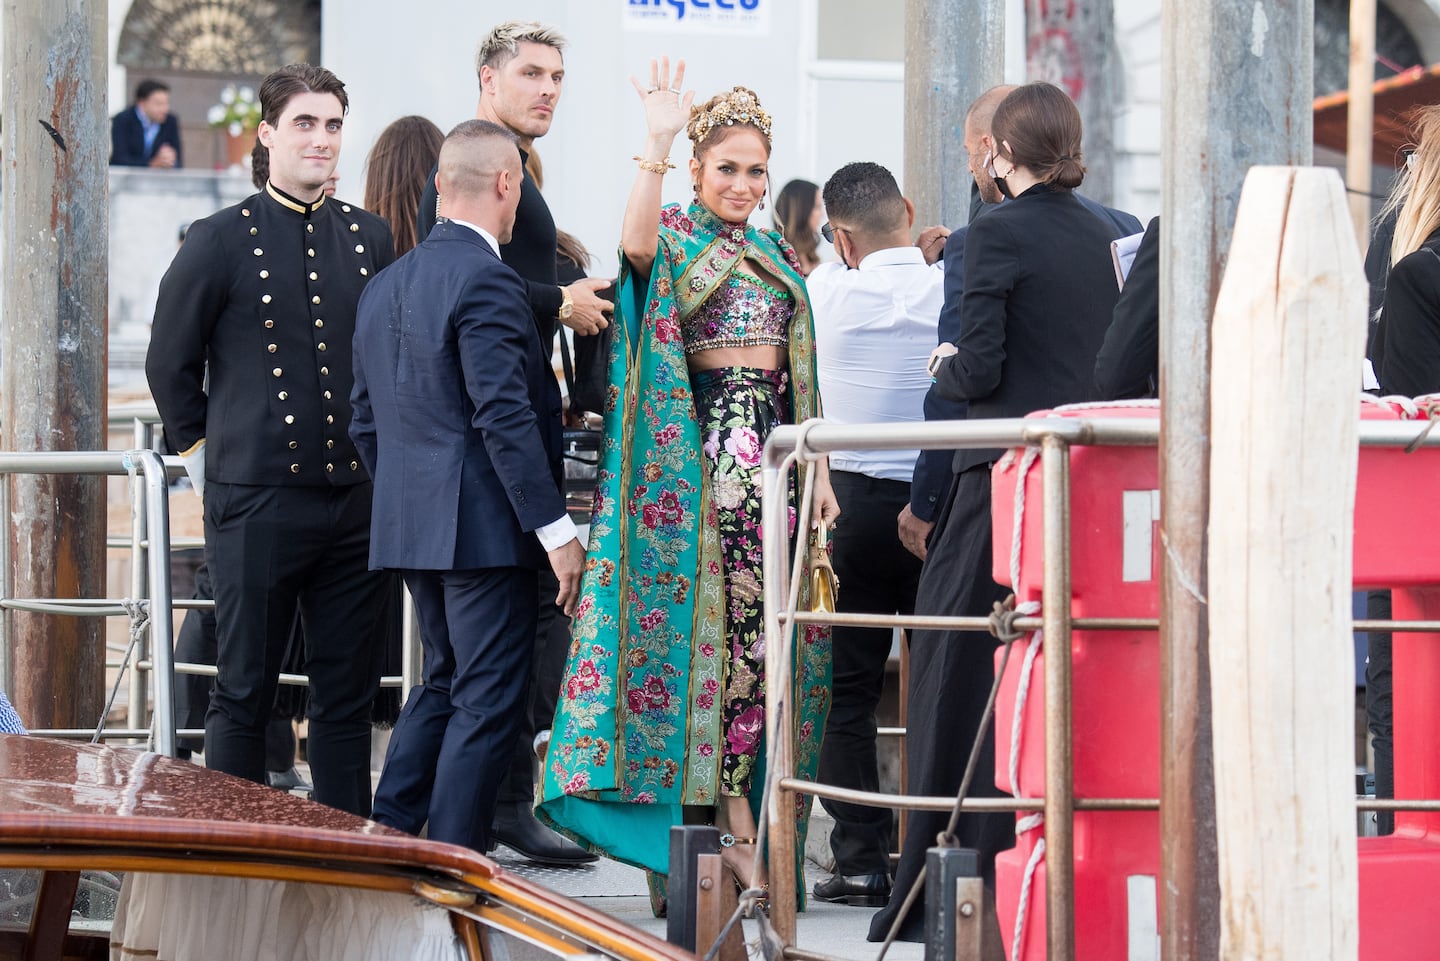 Jennifer Lopez attends Dolce & Gabbana's Alta Moda show in Venice. Getty Images.